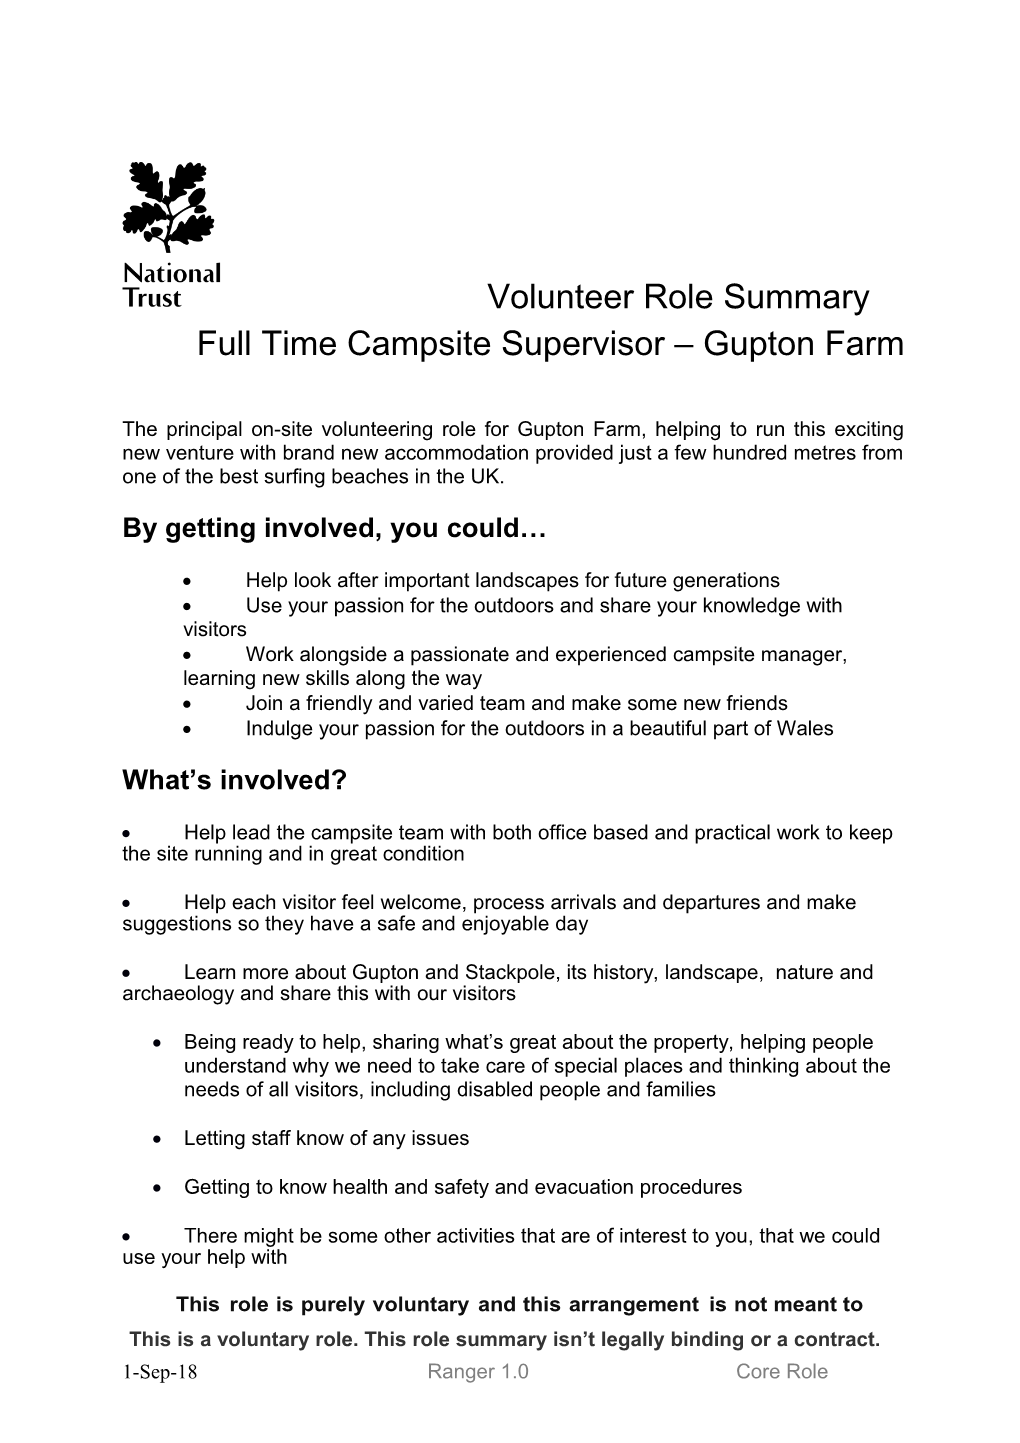 Ranger Volunteer Role Summary